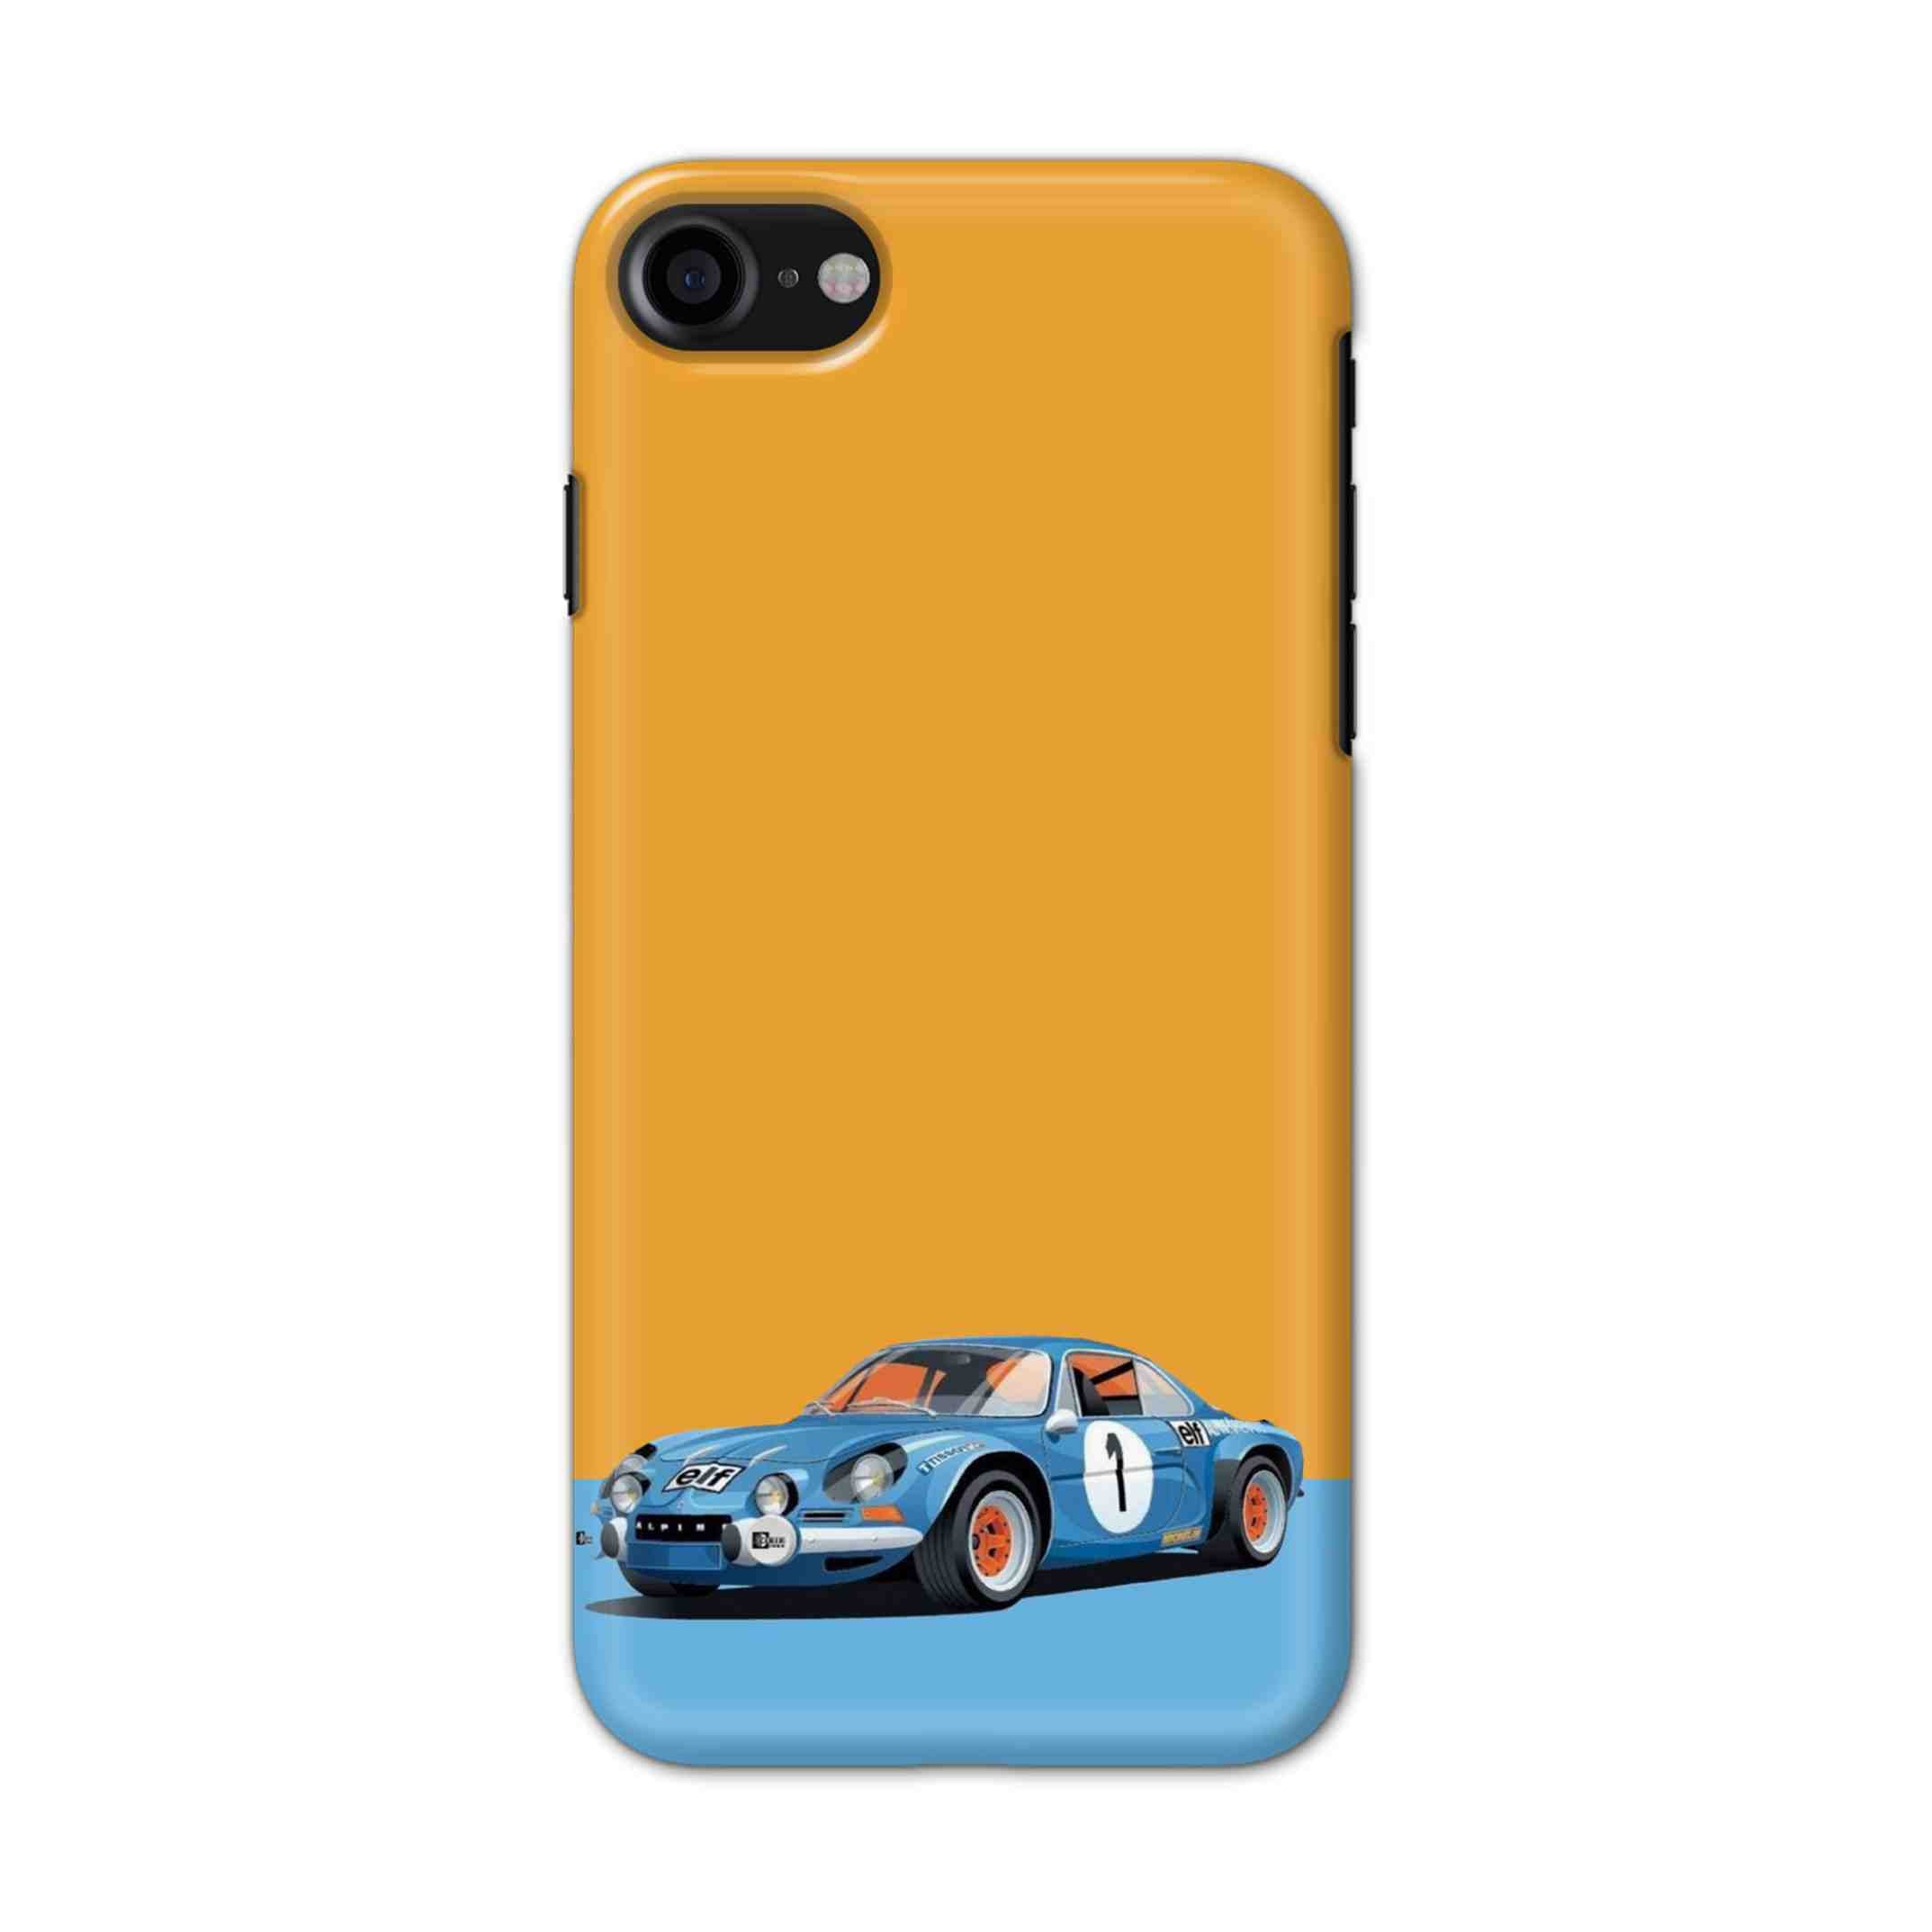 Buy Ferrari F1 Hard Back Mobile Phone Case/Cover For iPhone 7 / 8 Online